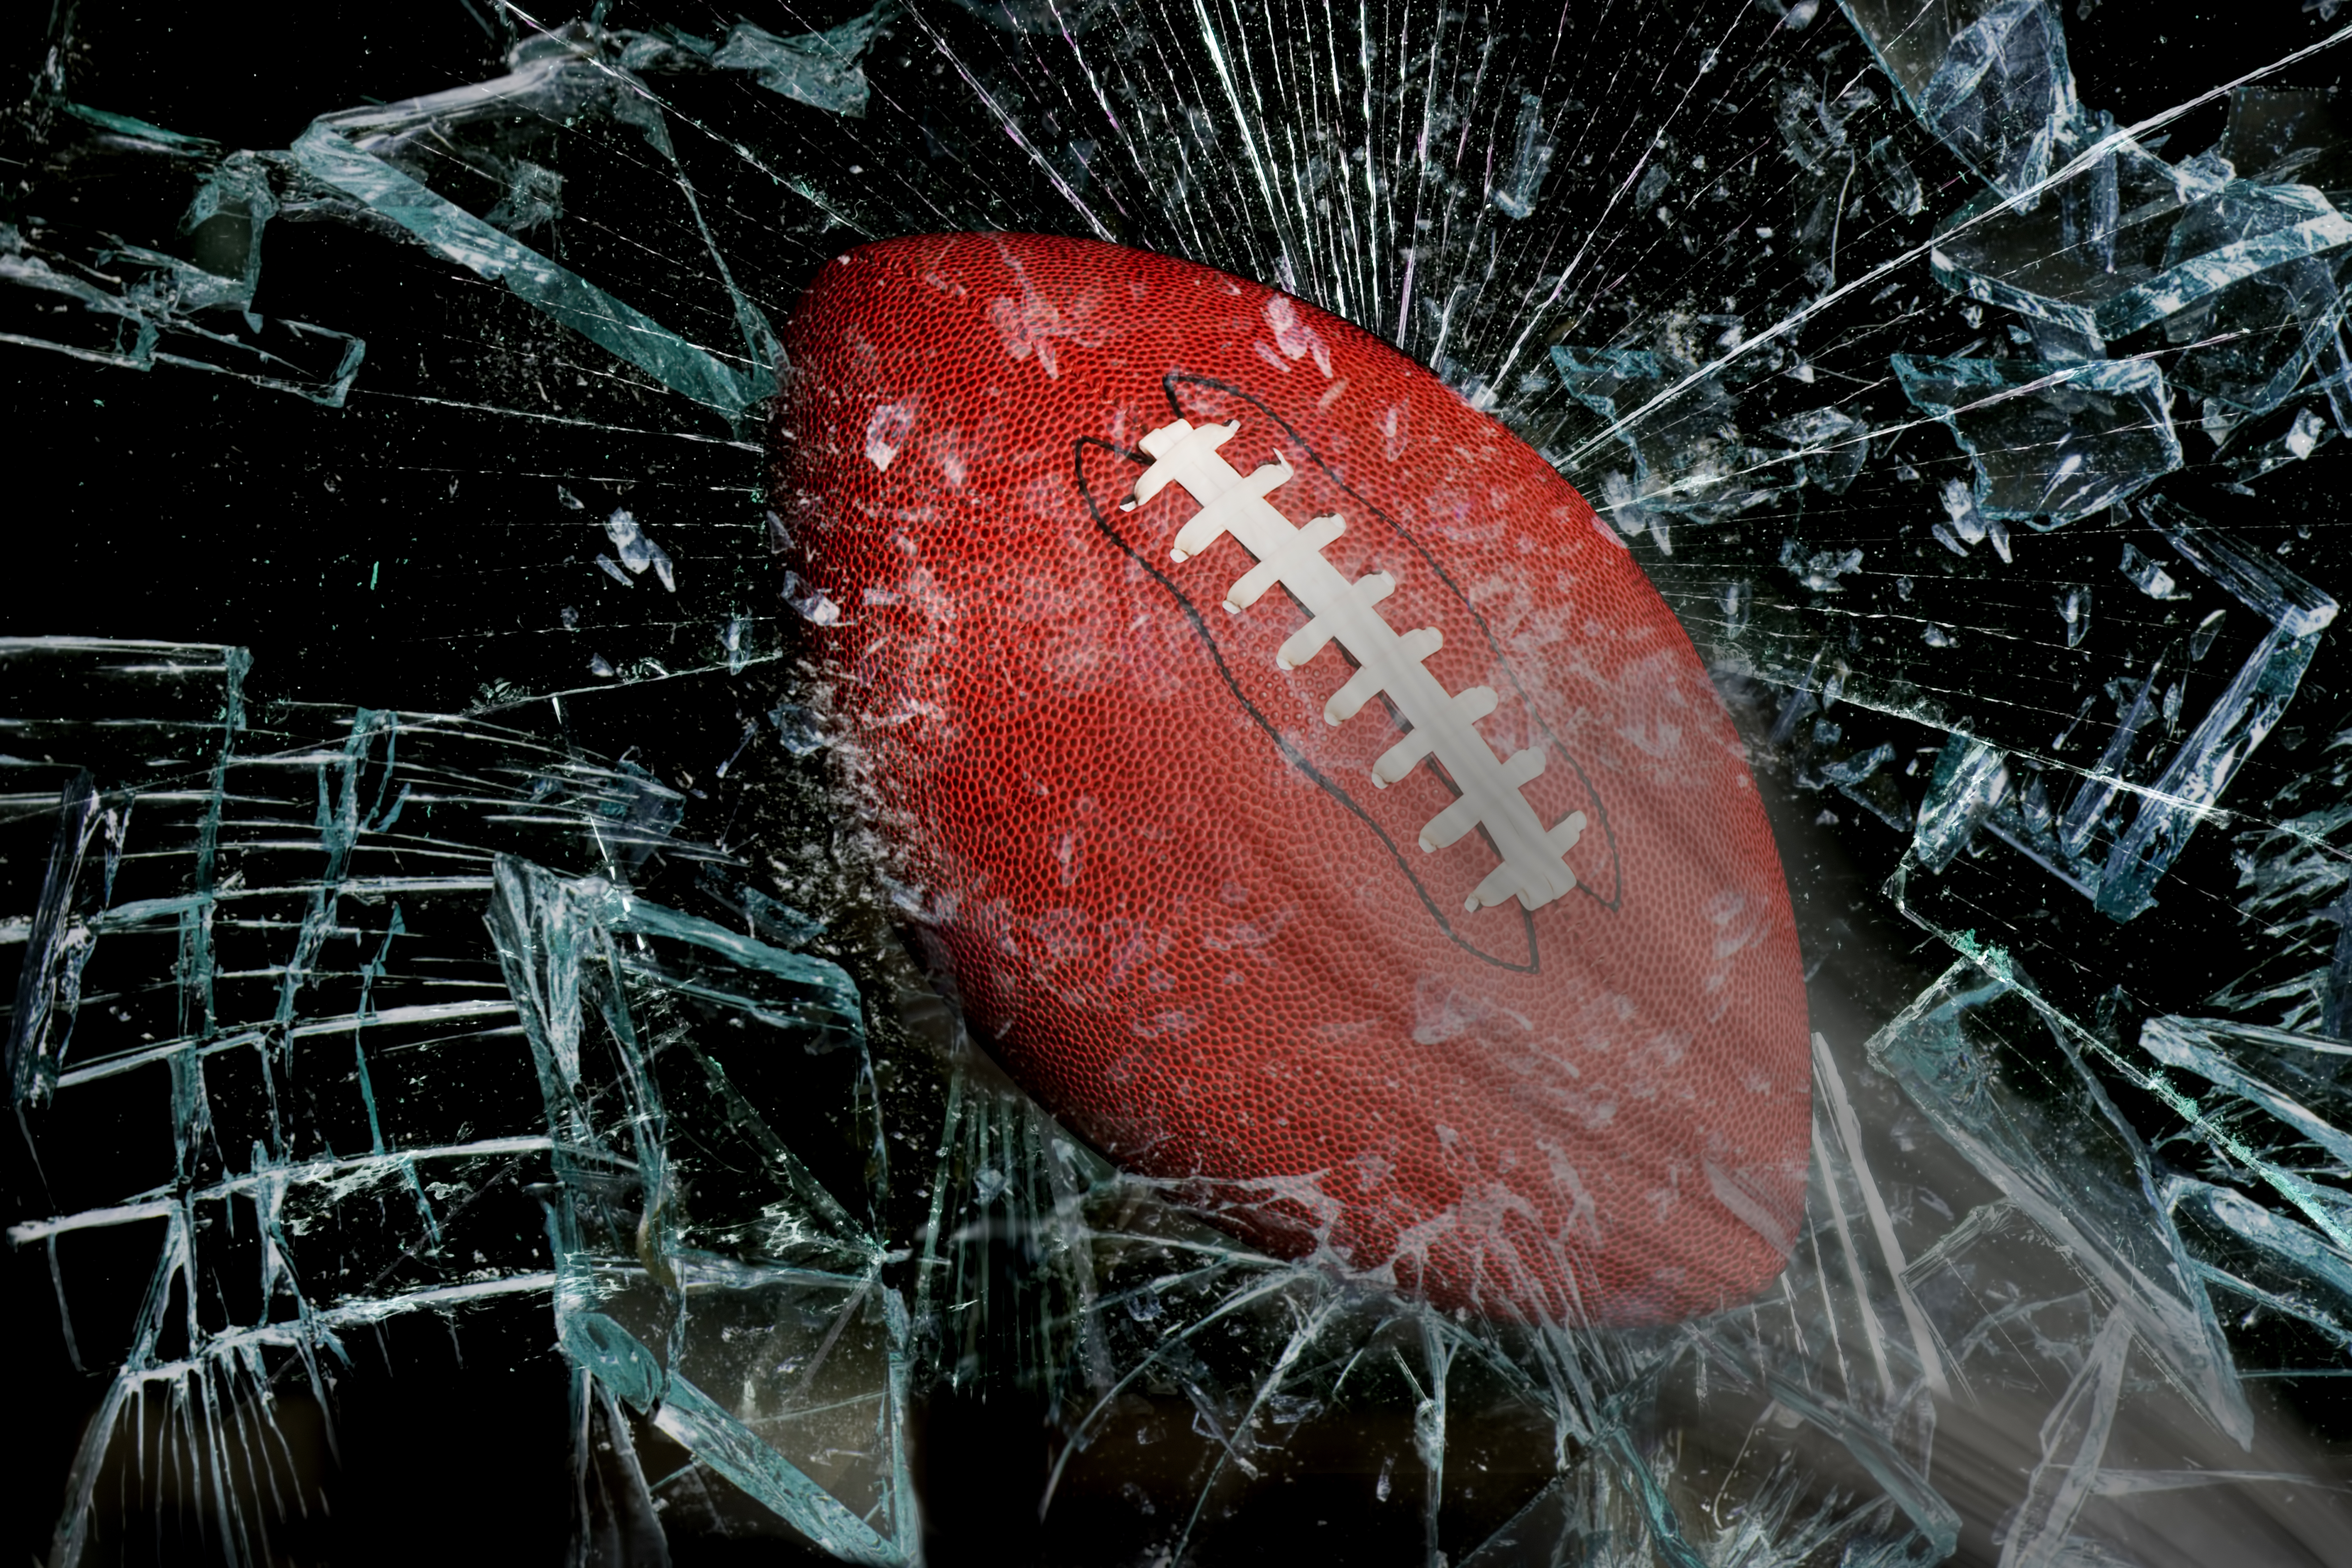 Football breaks through glass